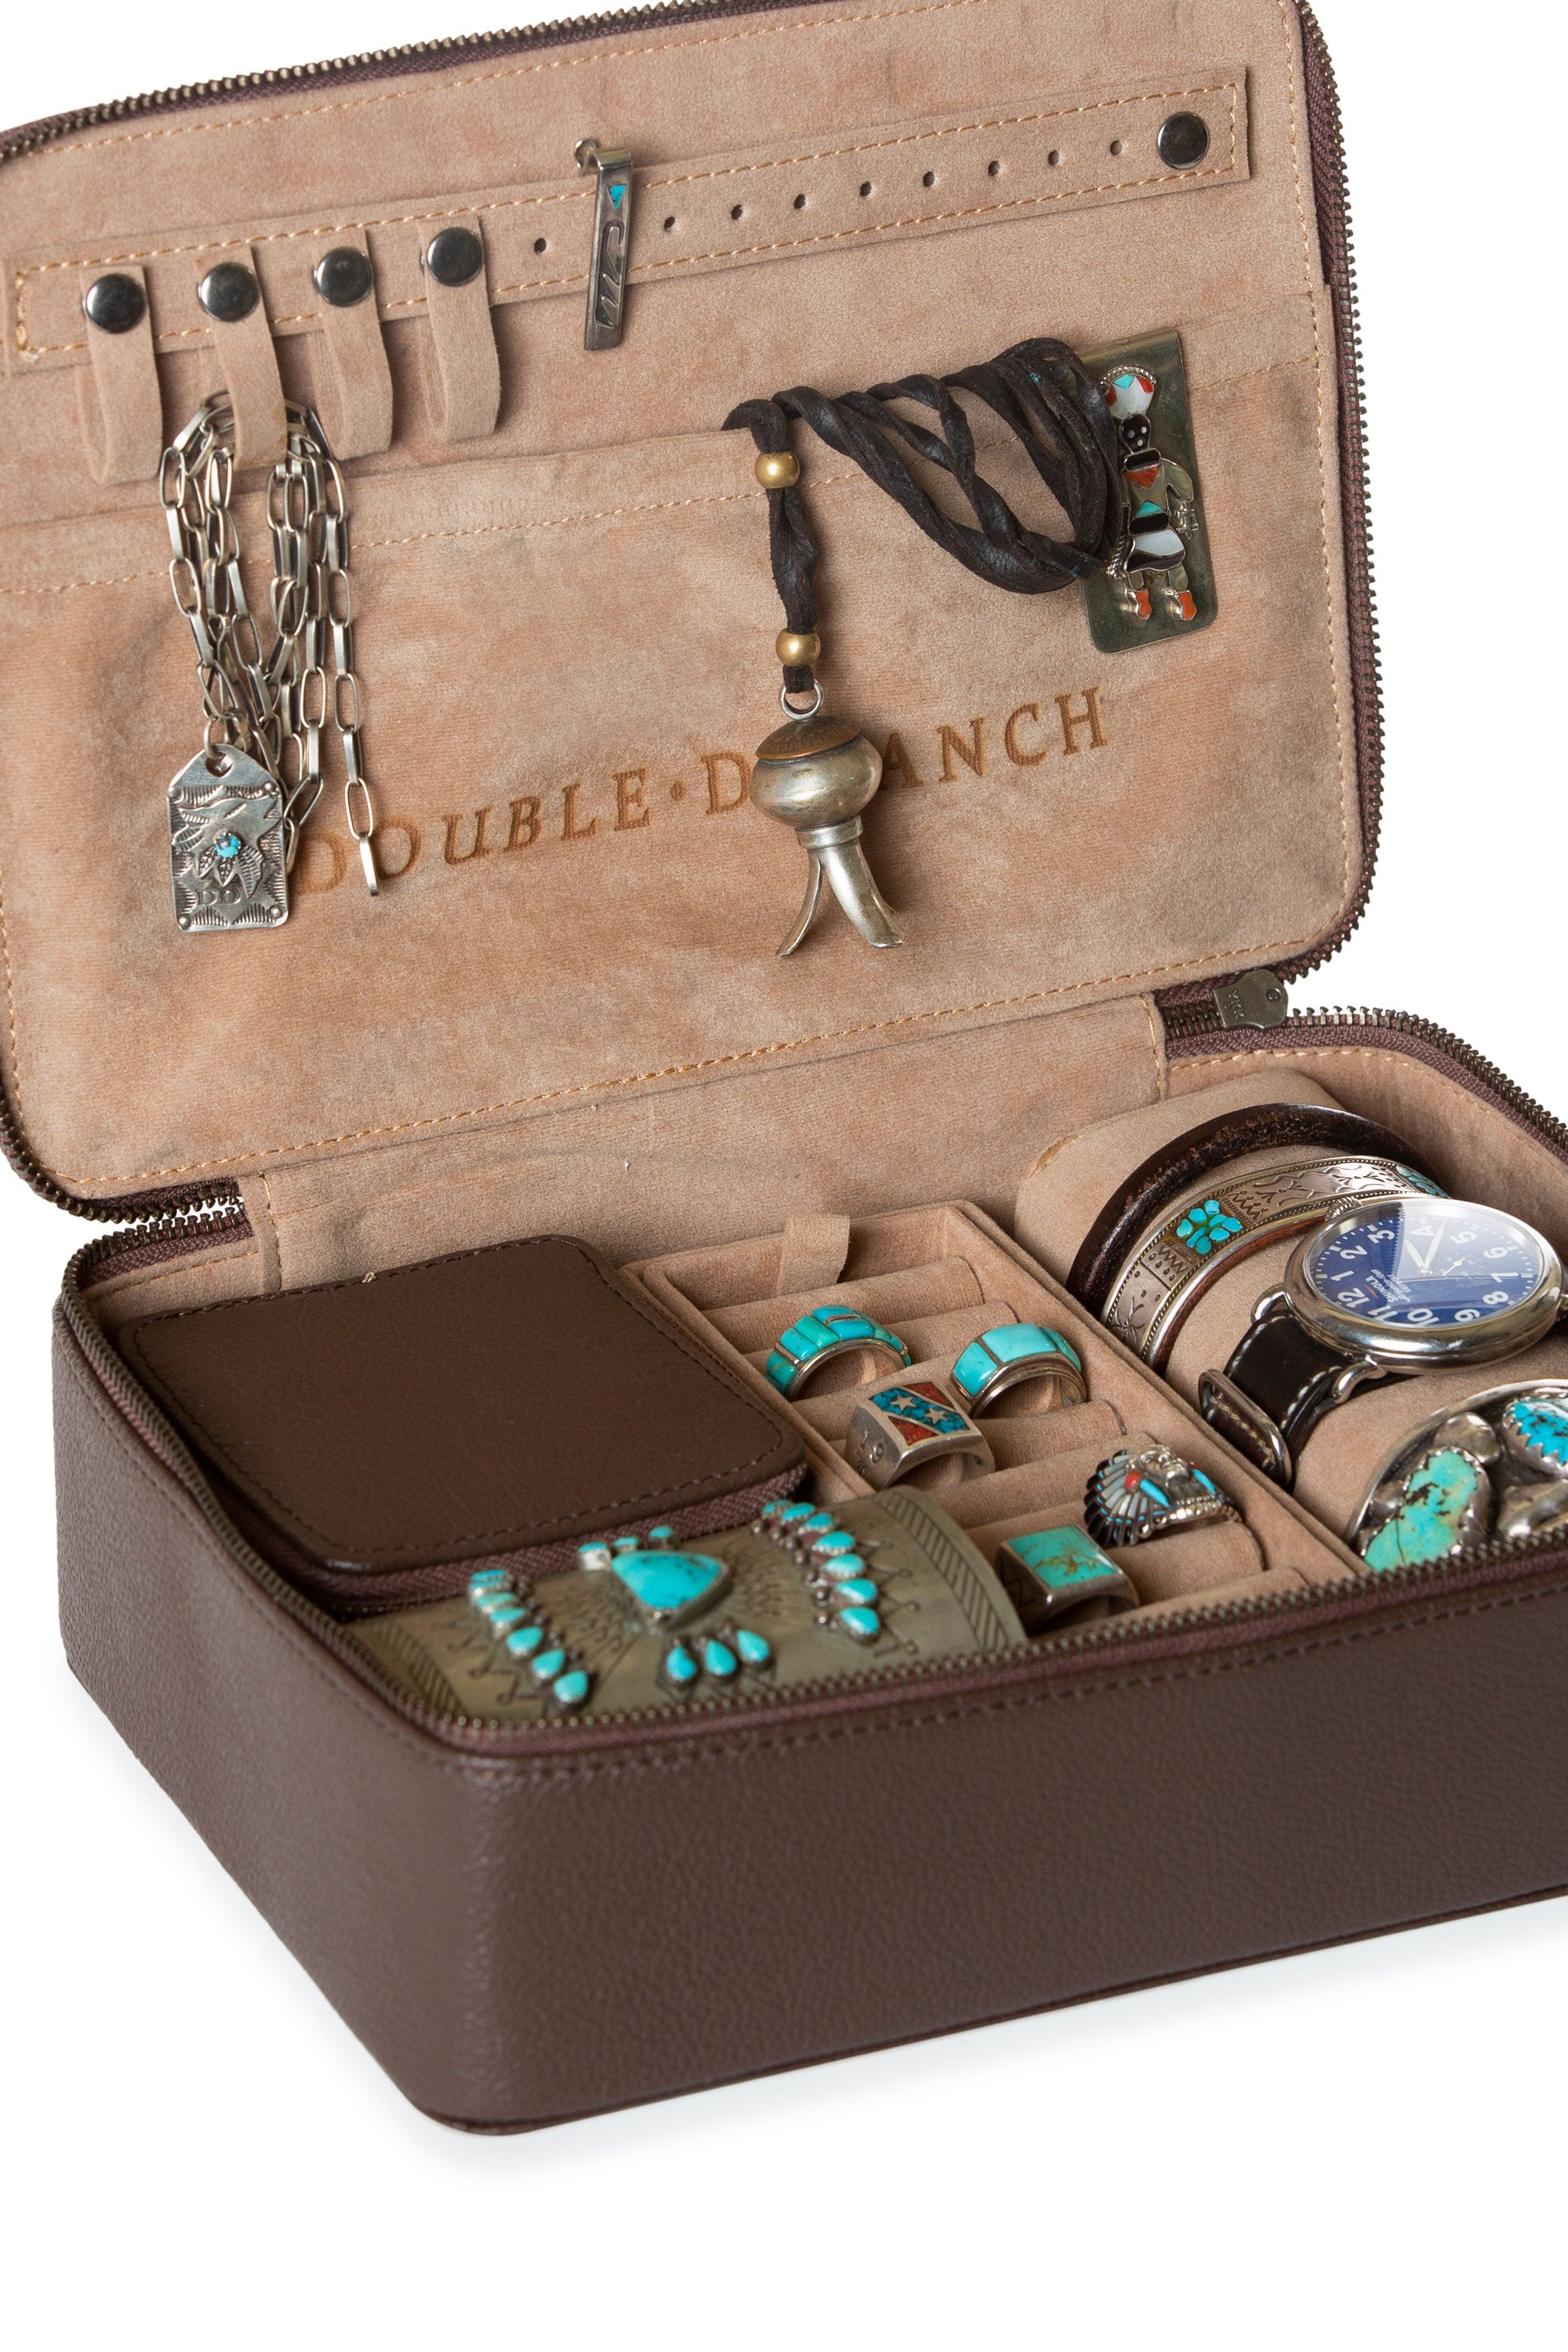 American Darling Travel Jewelry Case – Western Edge, Ltd.